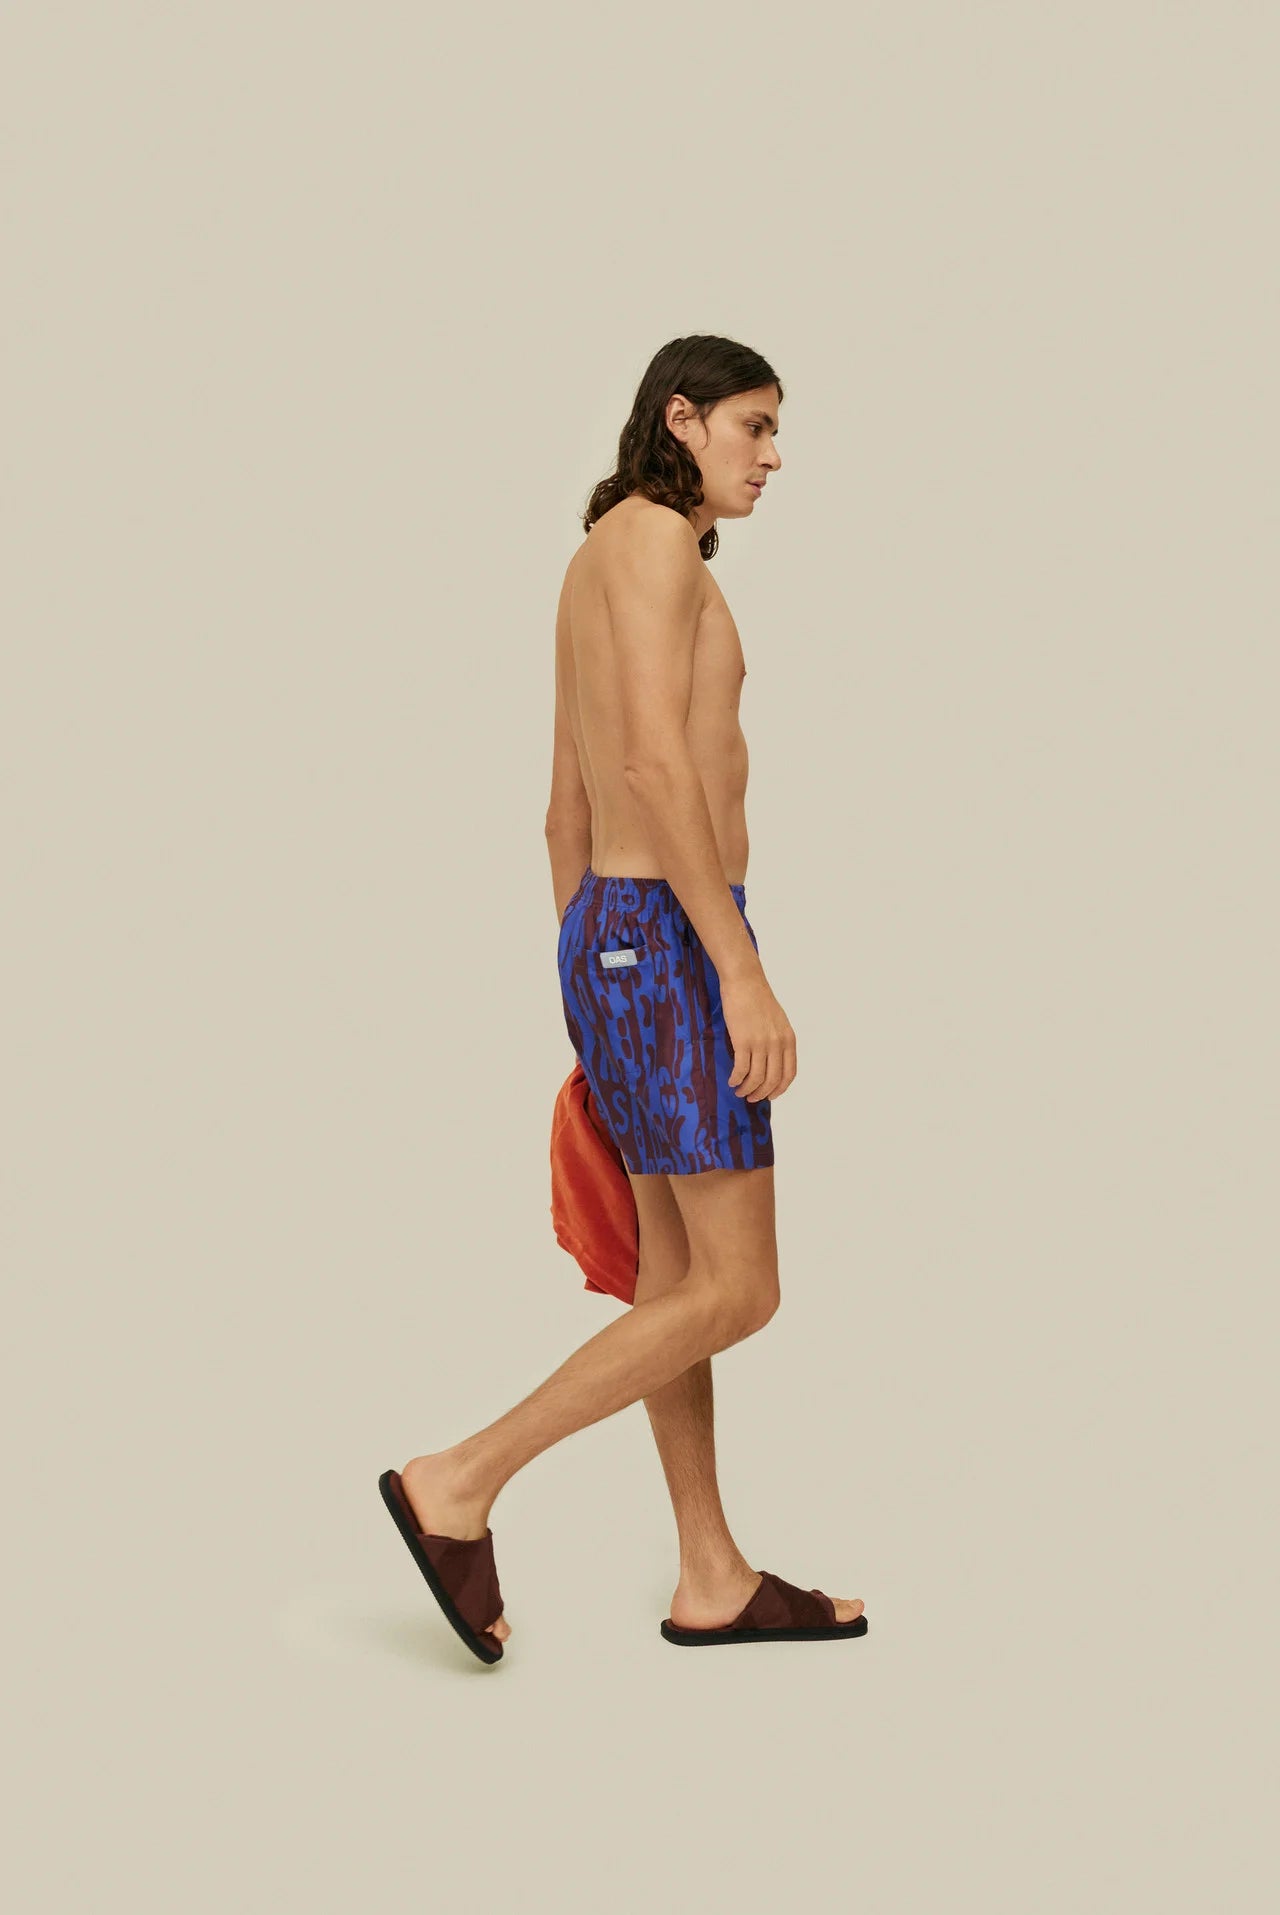 OAS Thenards Jiggle Swim Shorts on model. Model is wearing swim shorts carrying orange terry shirt. Taken from side.